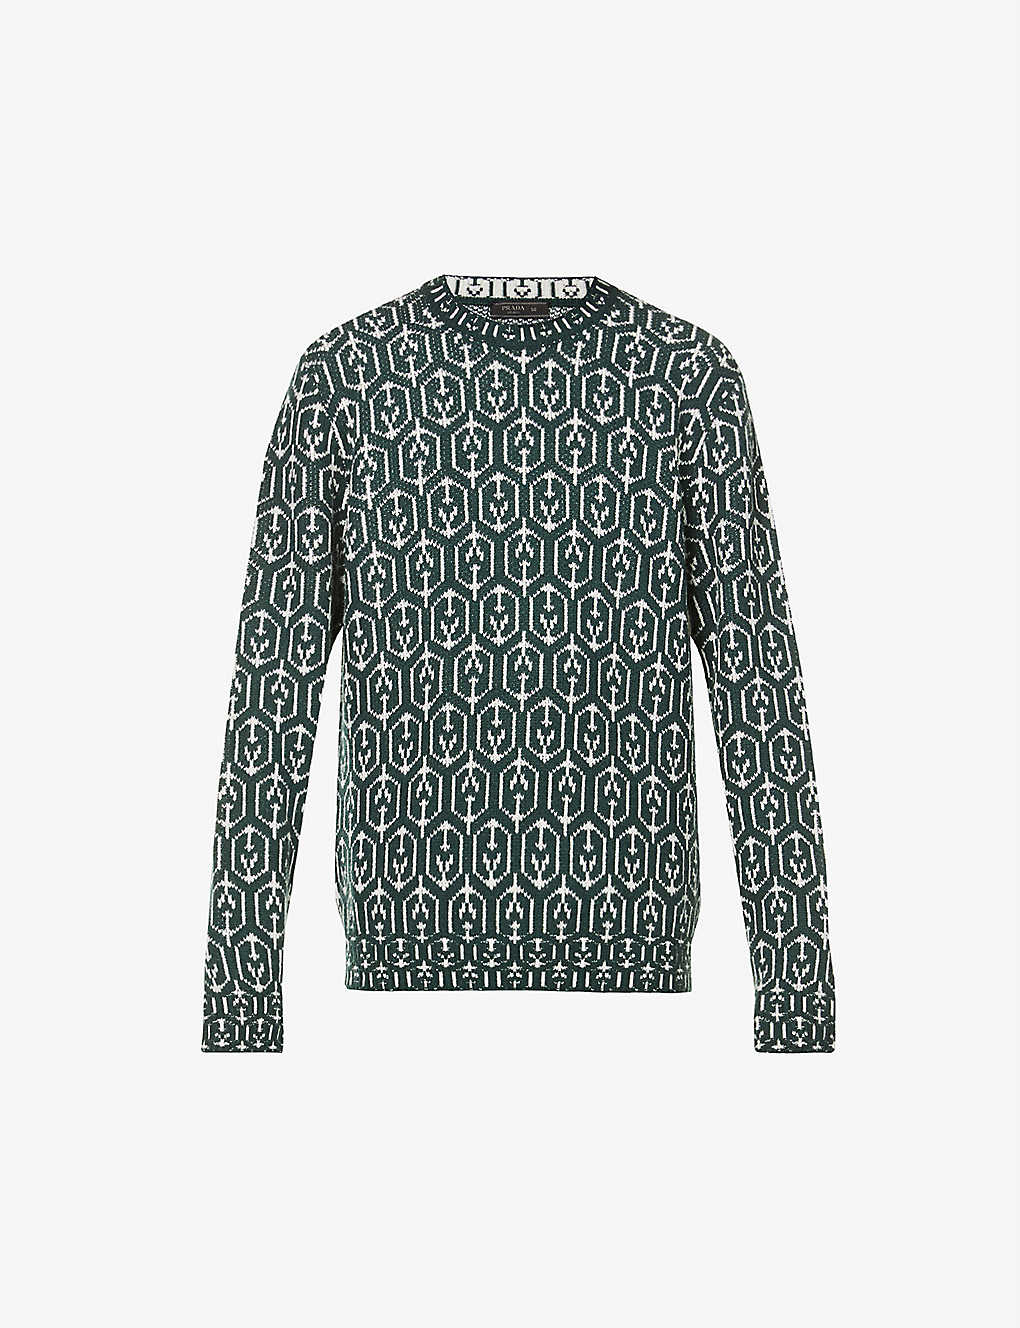 Geometric-pattern wool and cashmere-blend jumper(9291450)